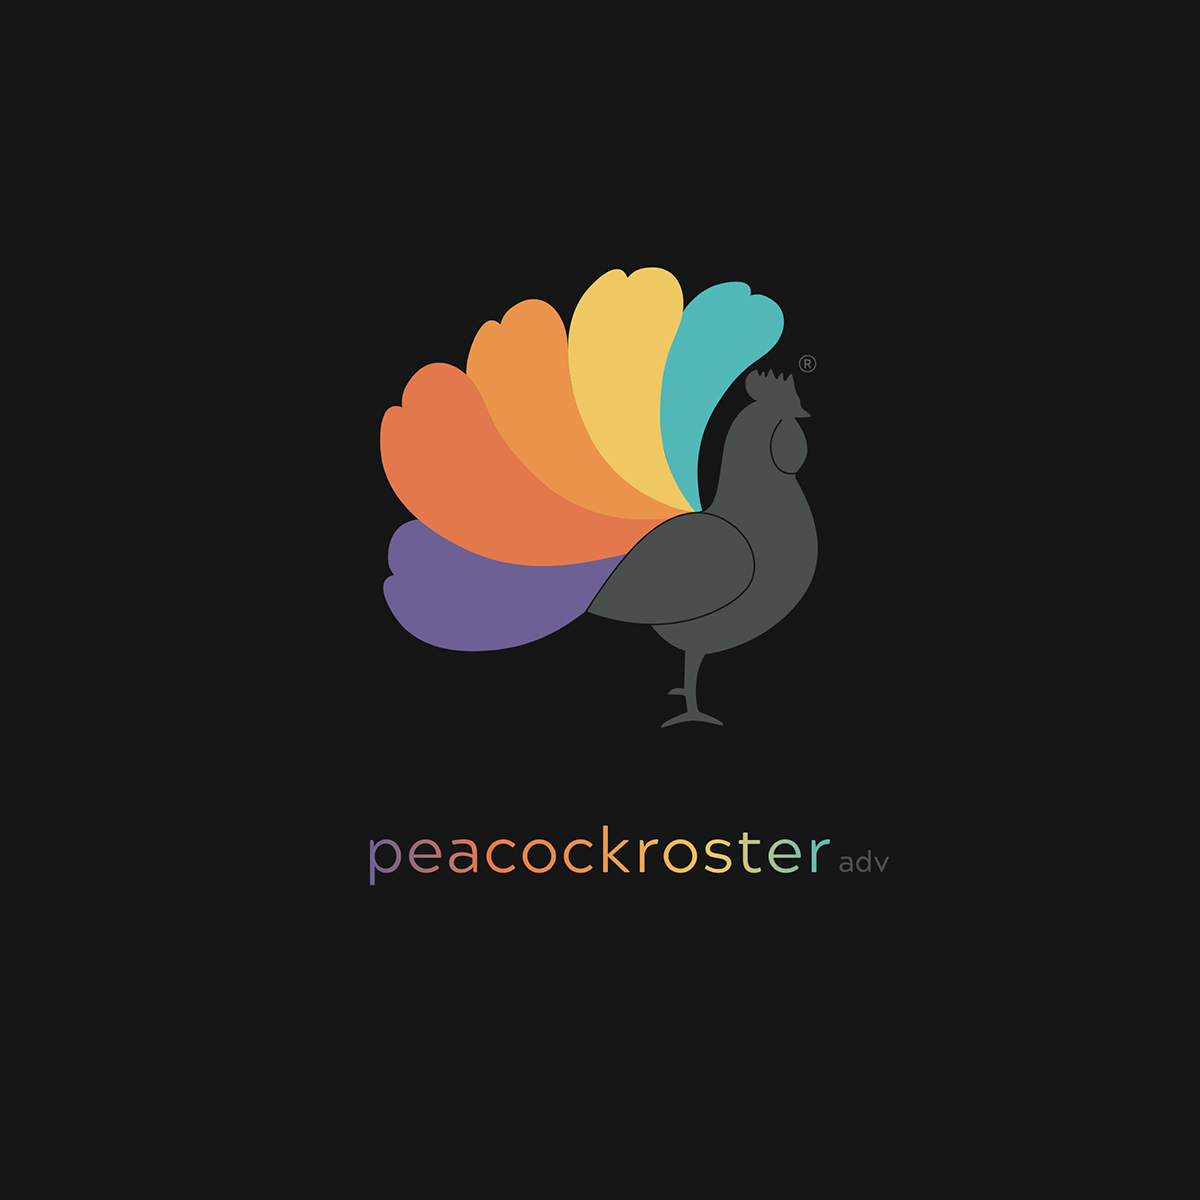 Peacockroster Adv